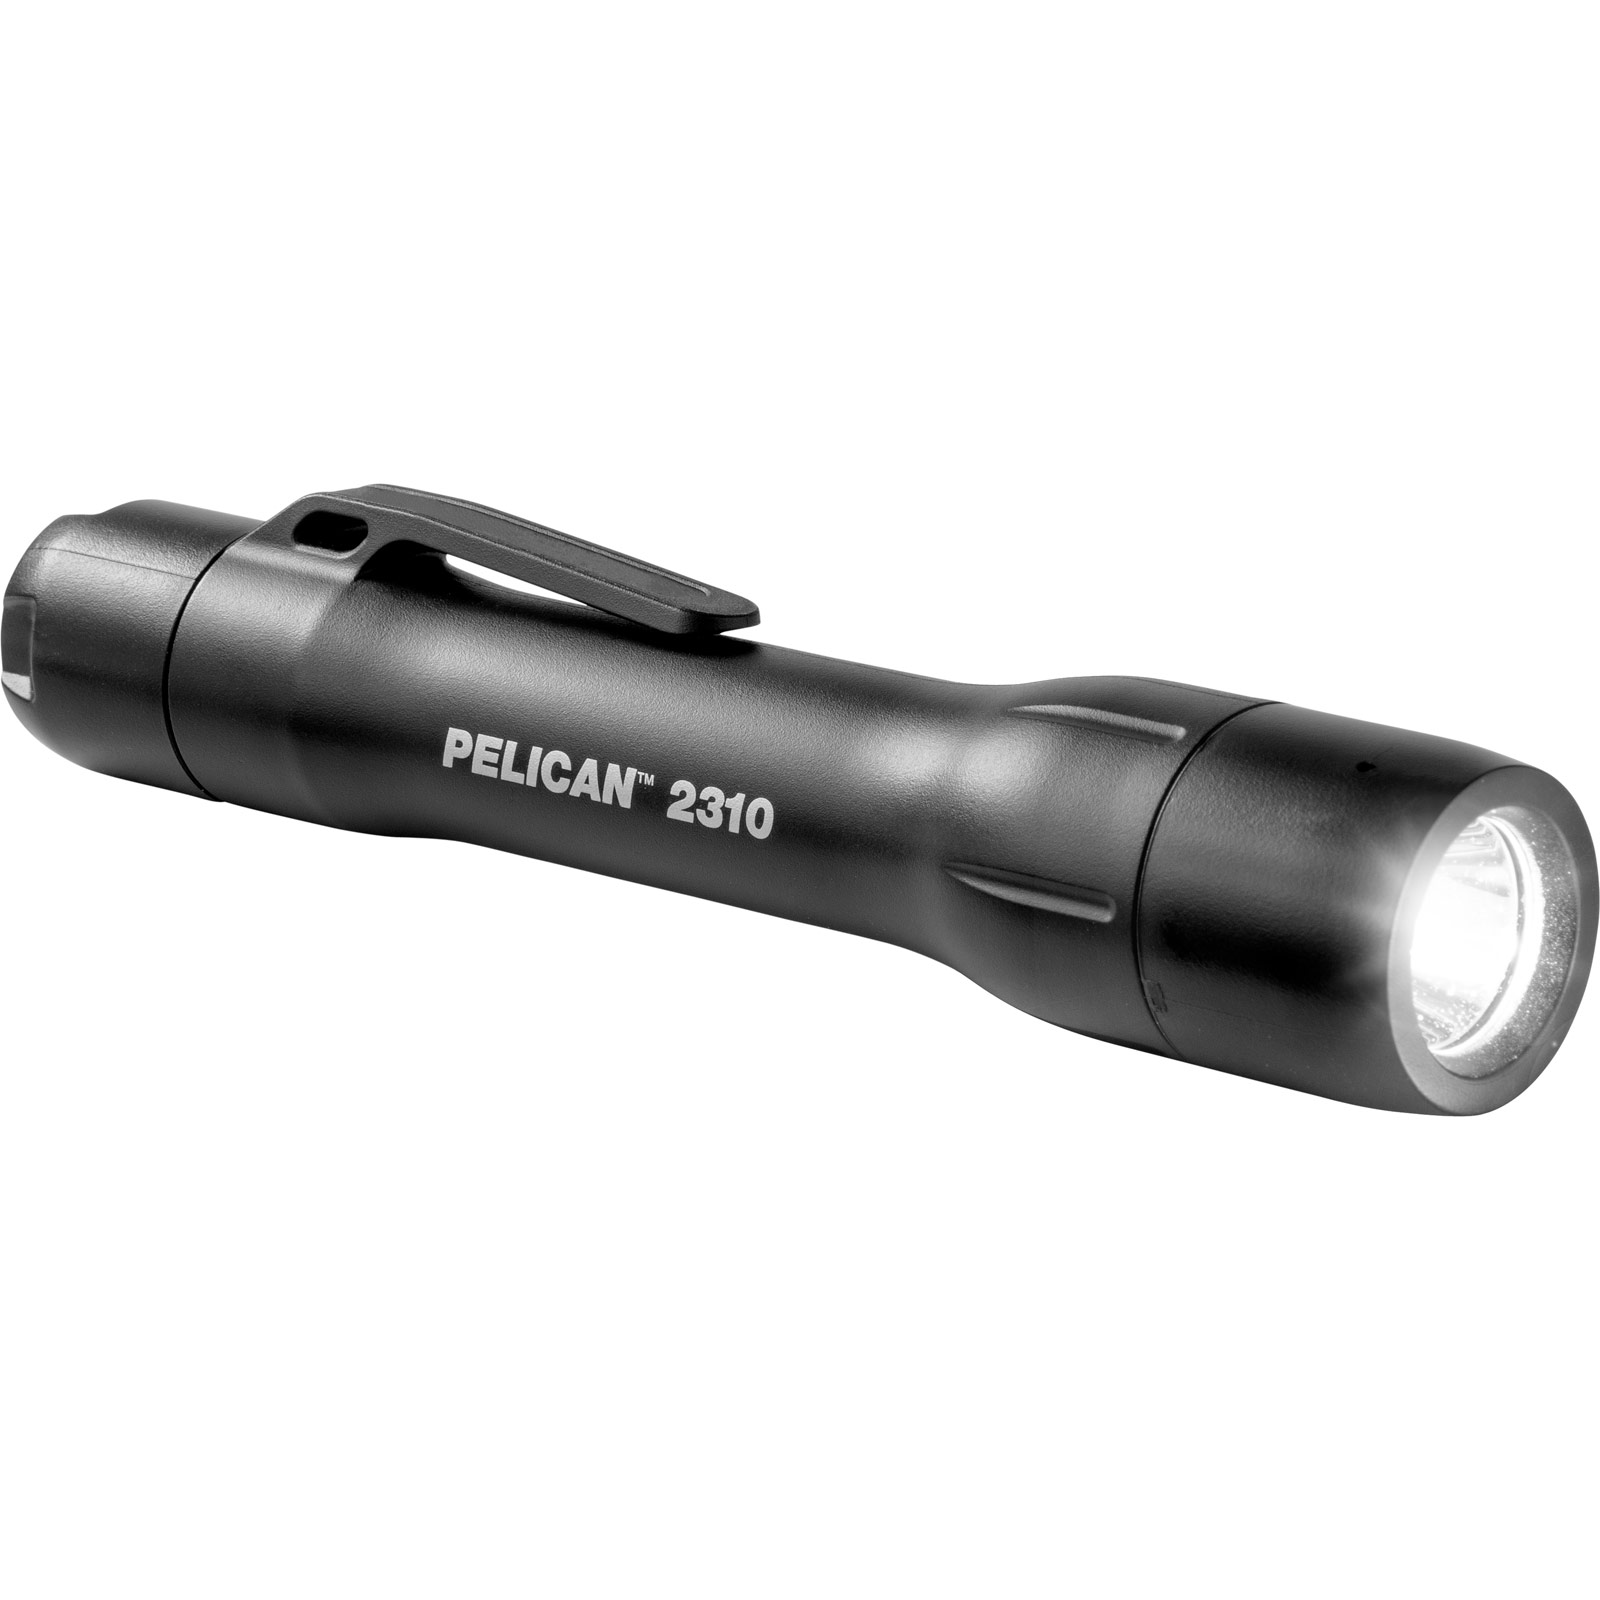 派力肯 Pelican™ Flashlights 2310  小型LED手电